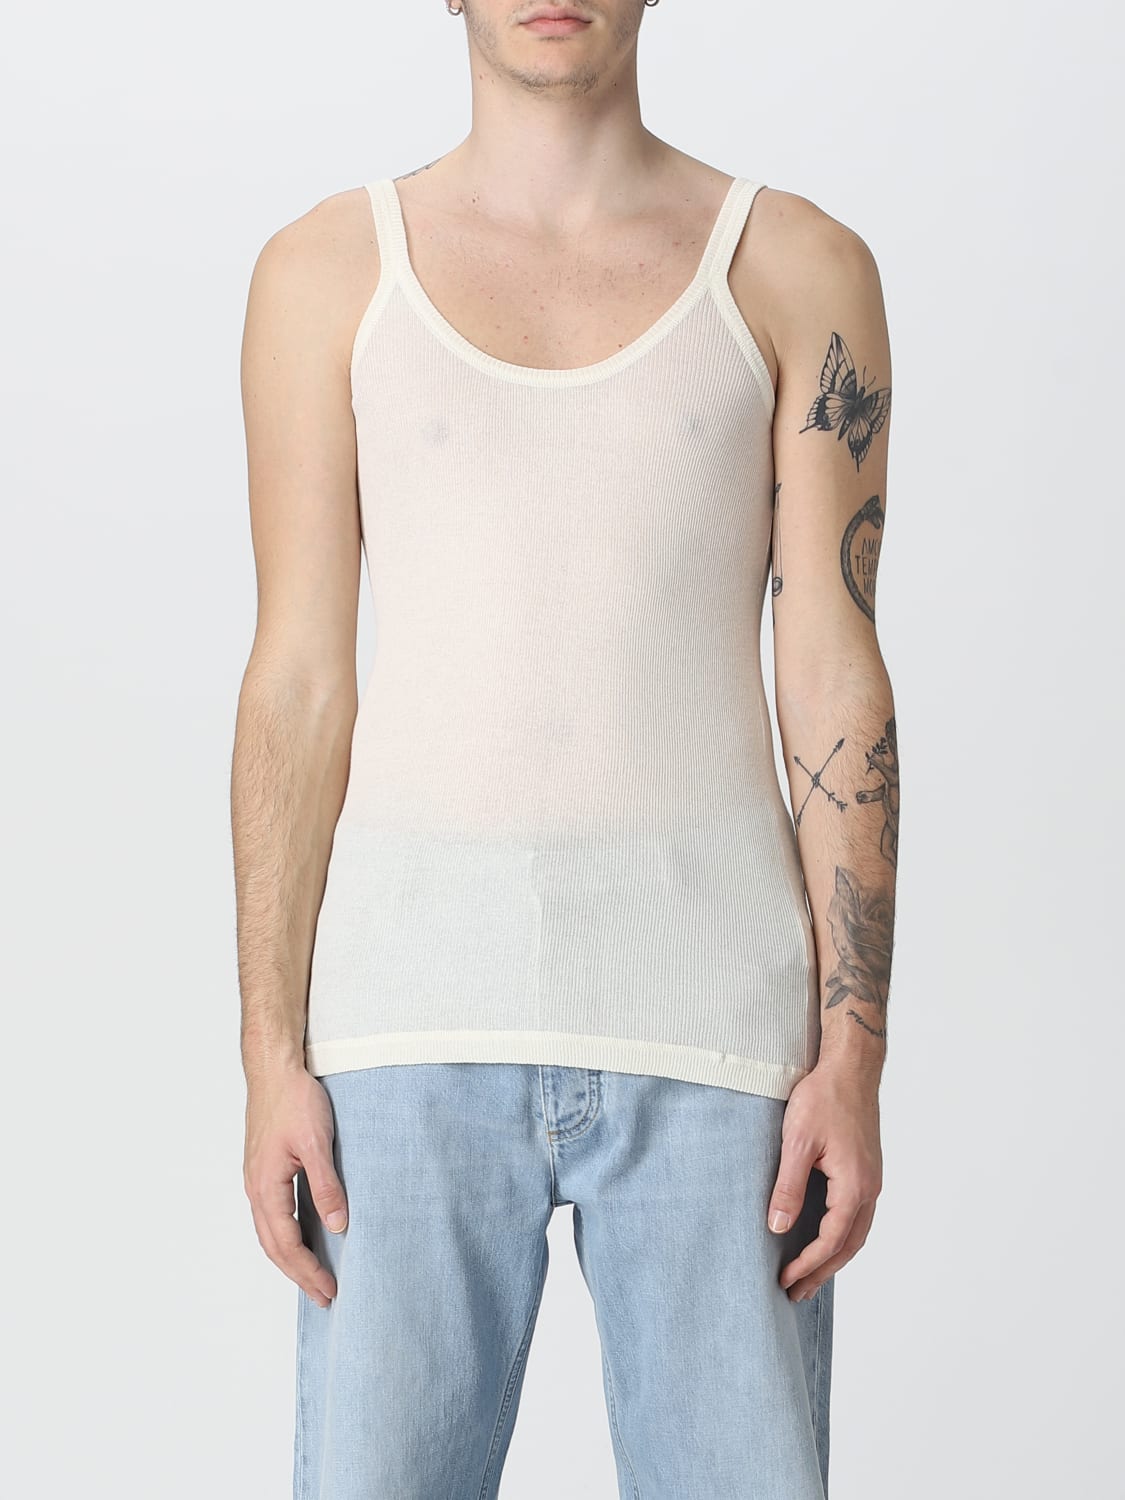 Bottega Veneta® Men's Stretch Cotton Ribbed Tank Top in Light grey melange.  Shop online now.